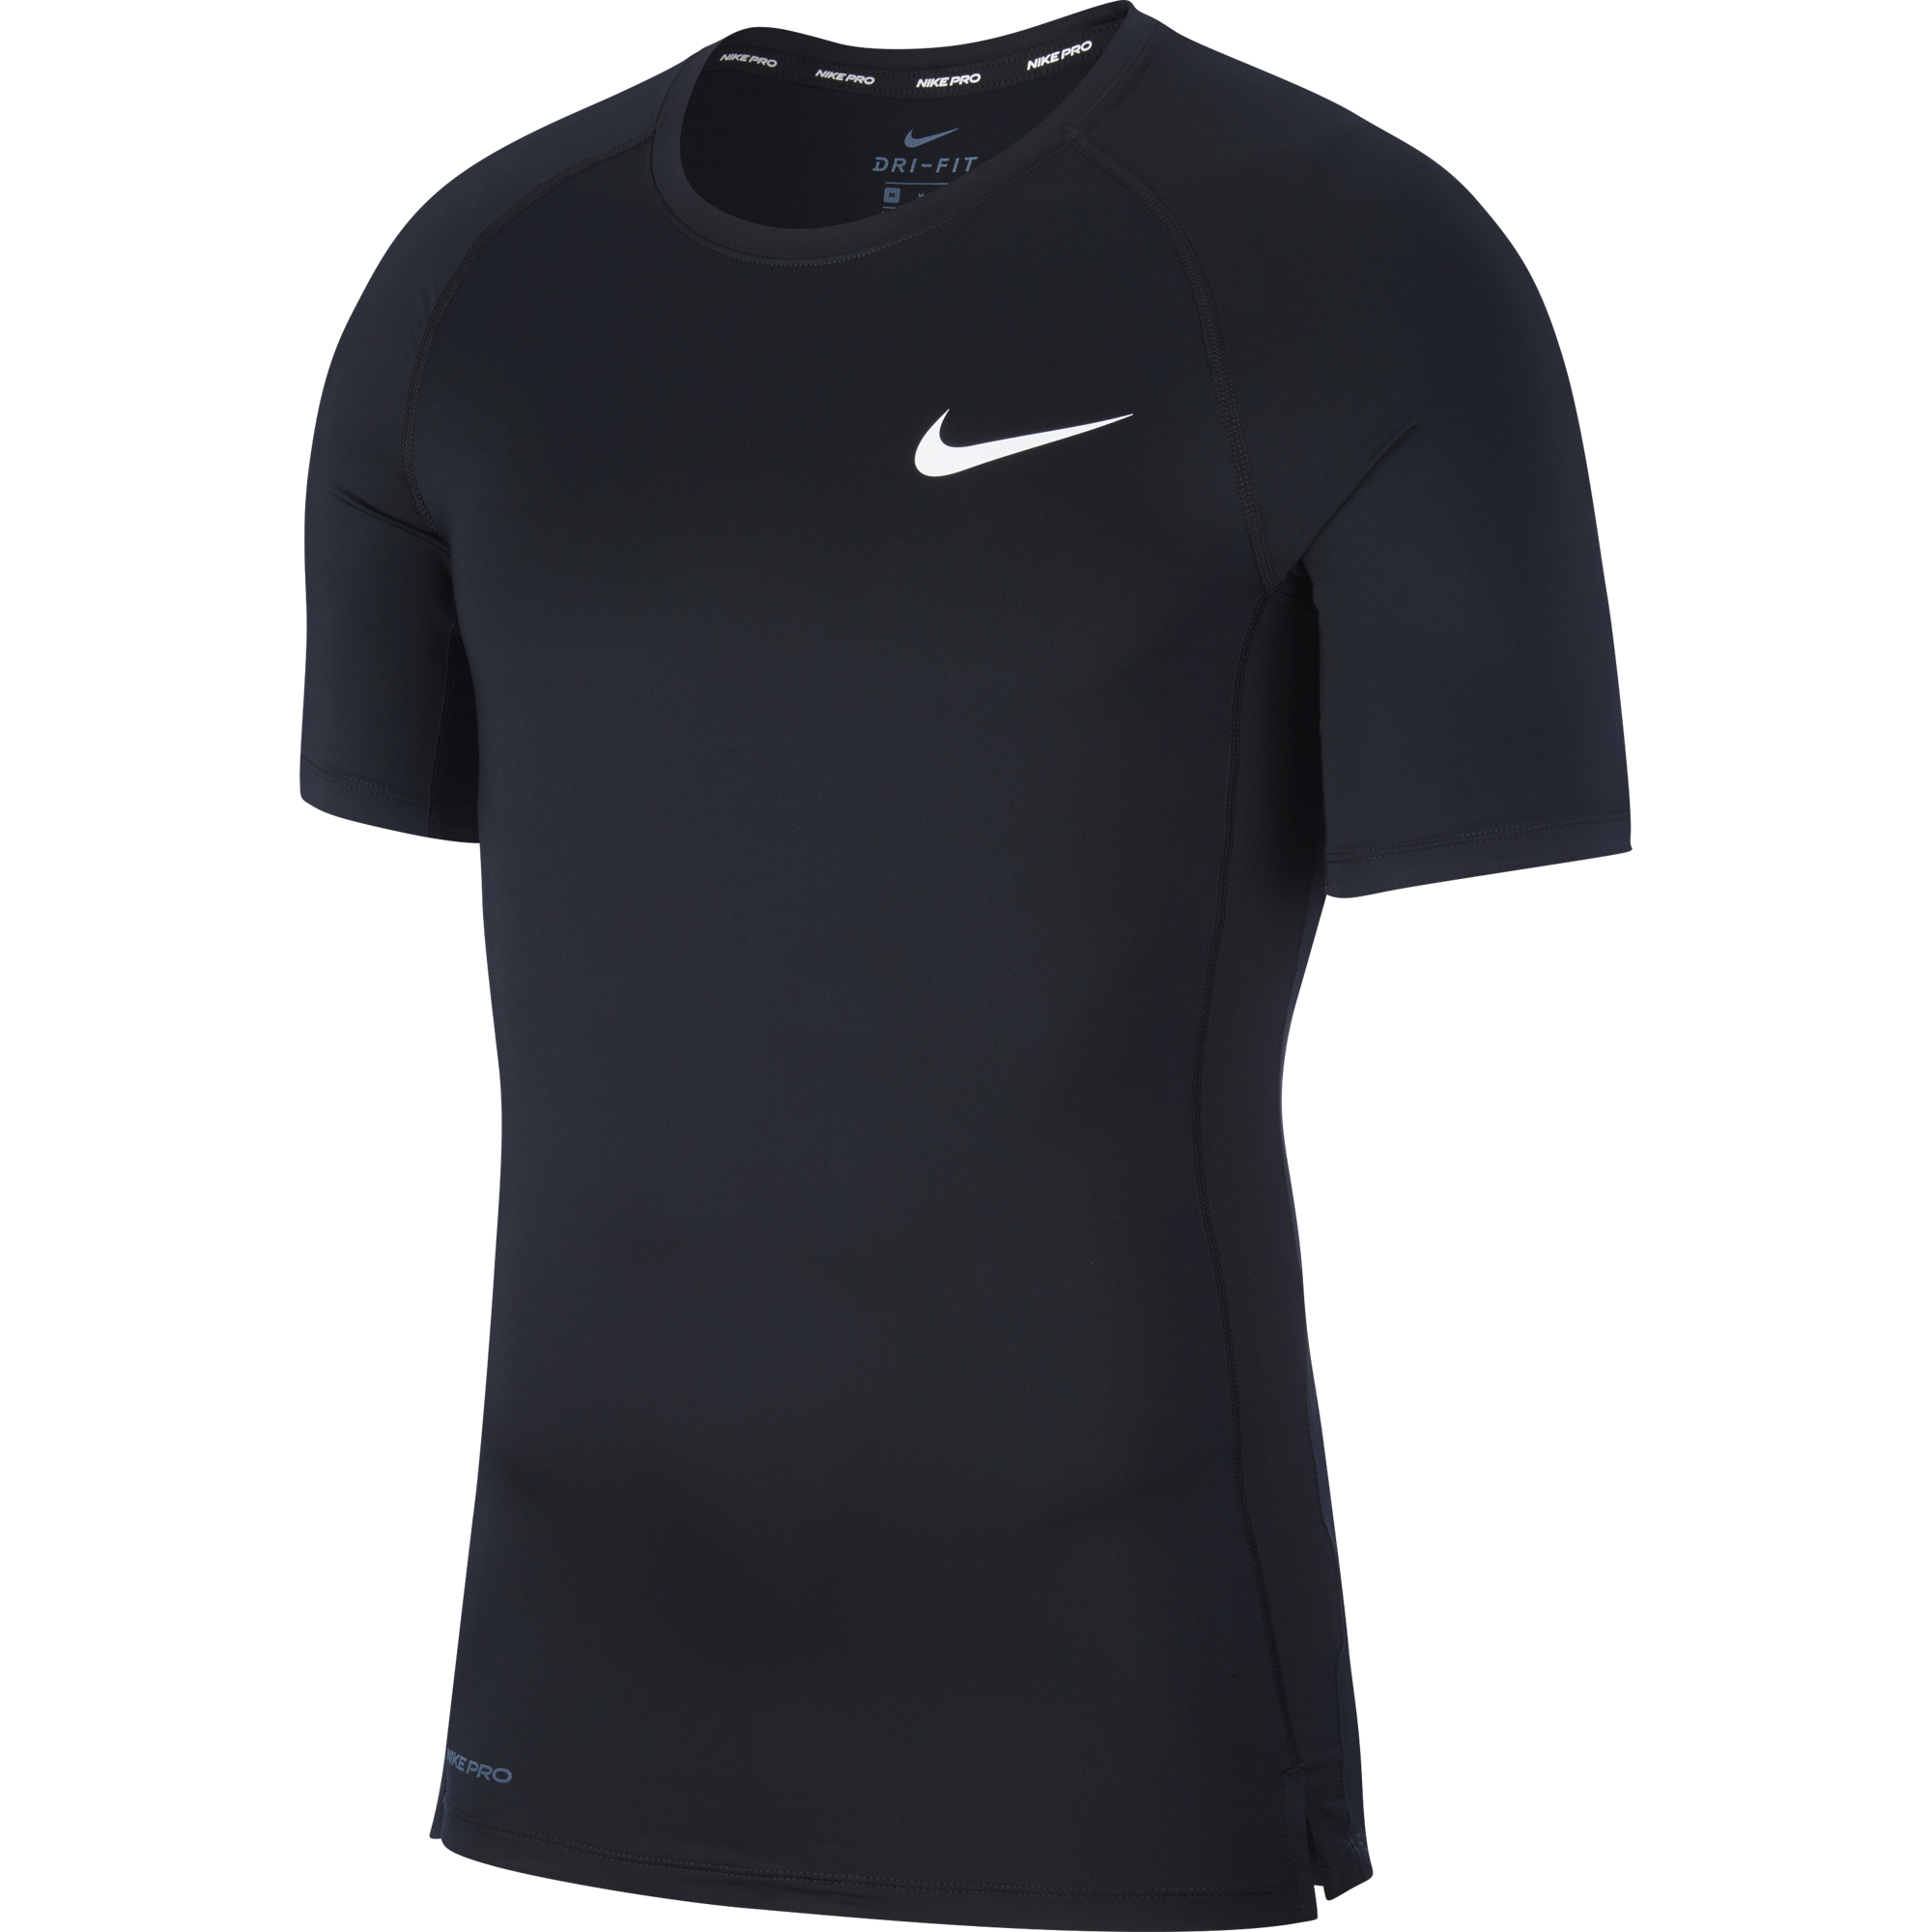 Men's Nike Pro Tight Fit Short-Sleeve Top 2021